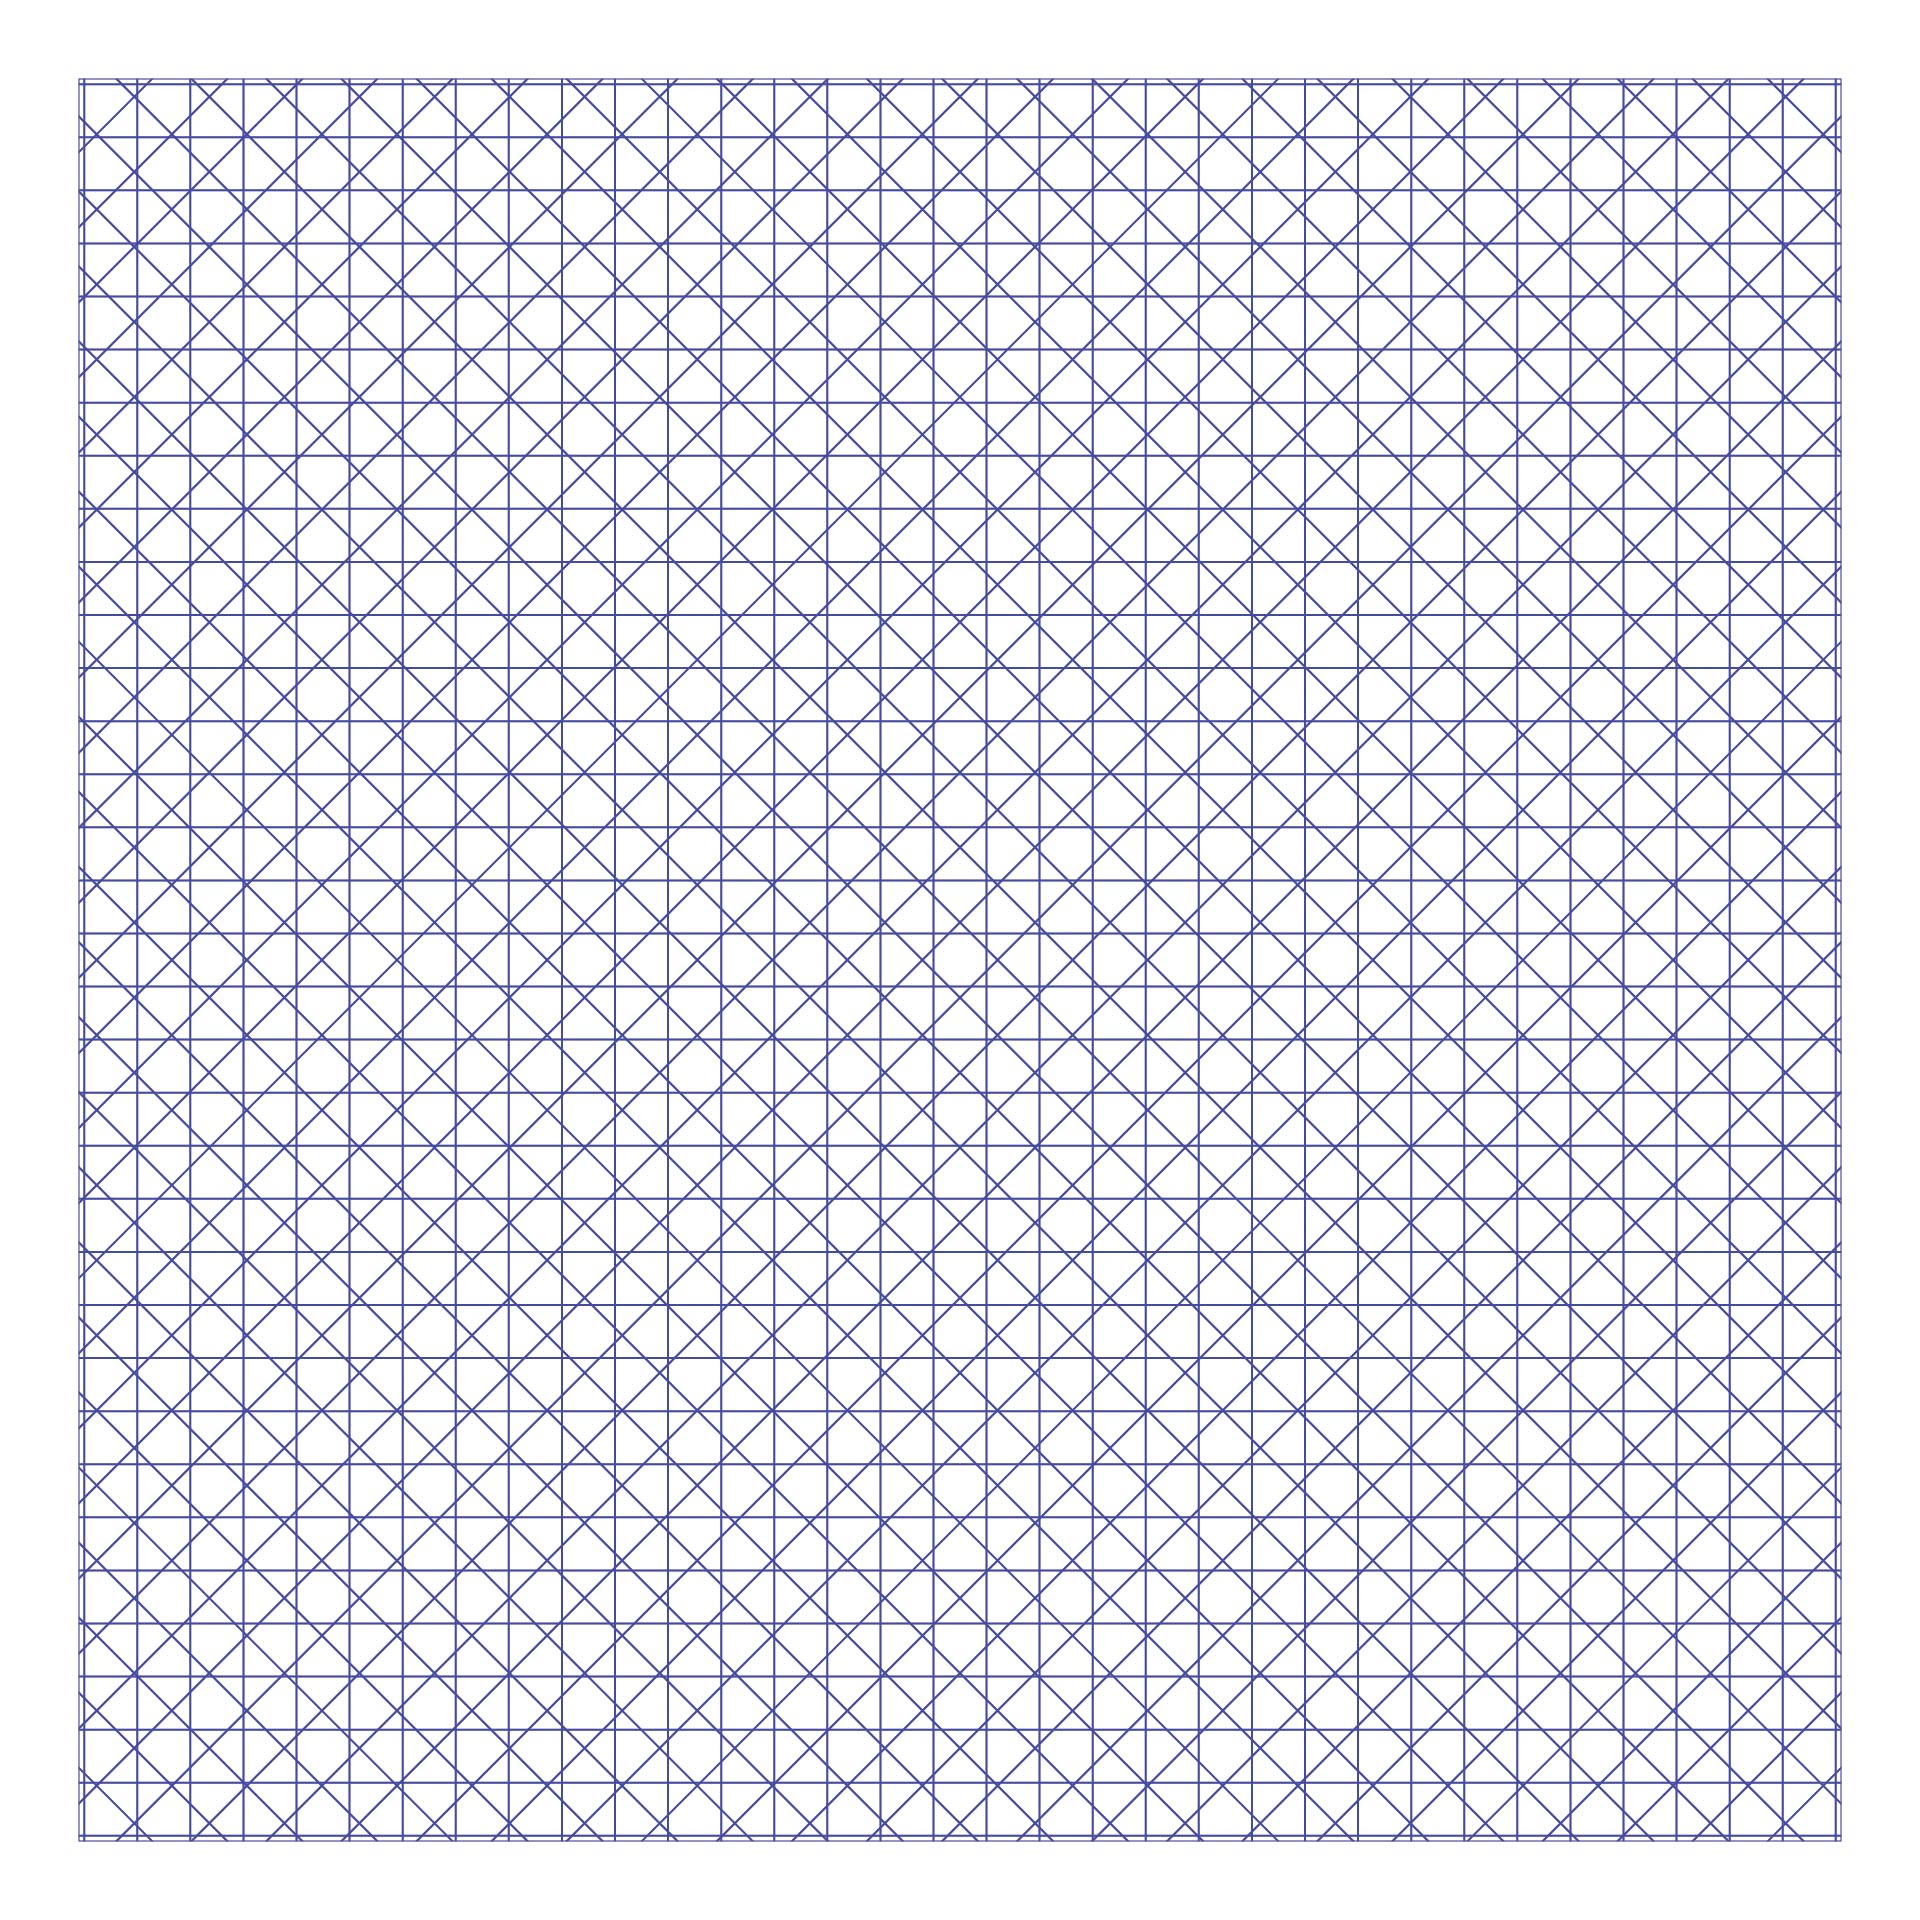 10 Best Printable Isometric Grid Paper